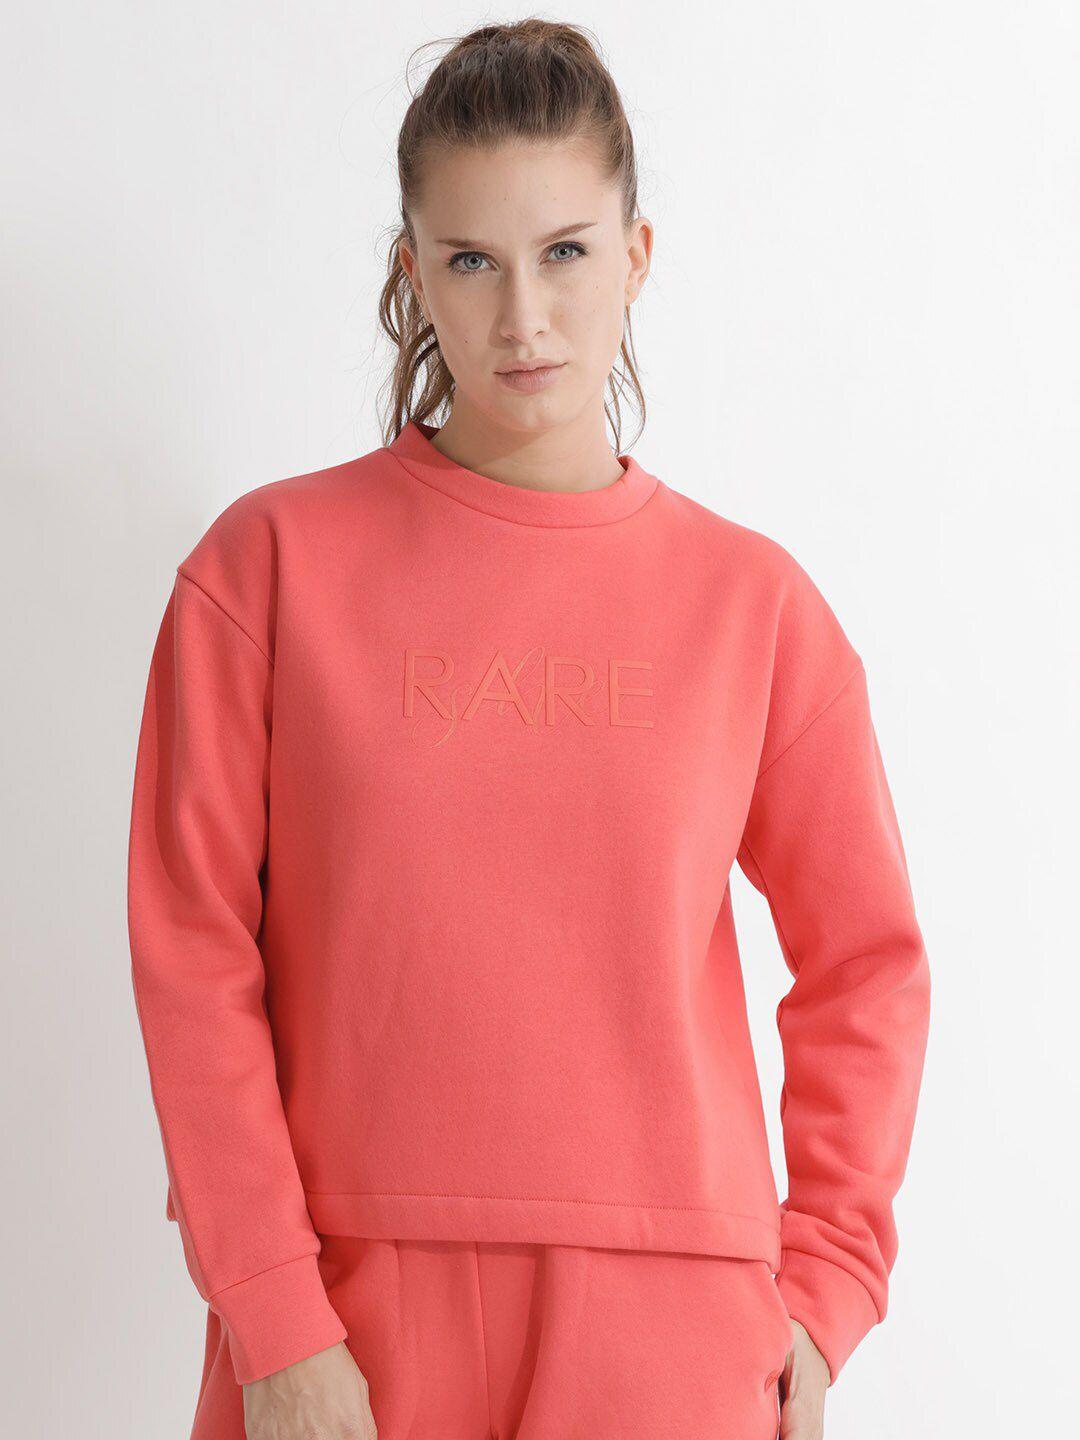 rareism-brand-logo-printed-cotton-sweatshirt